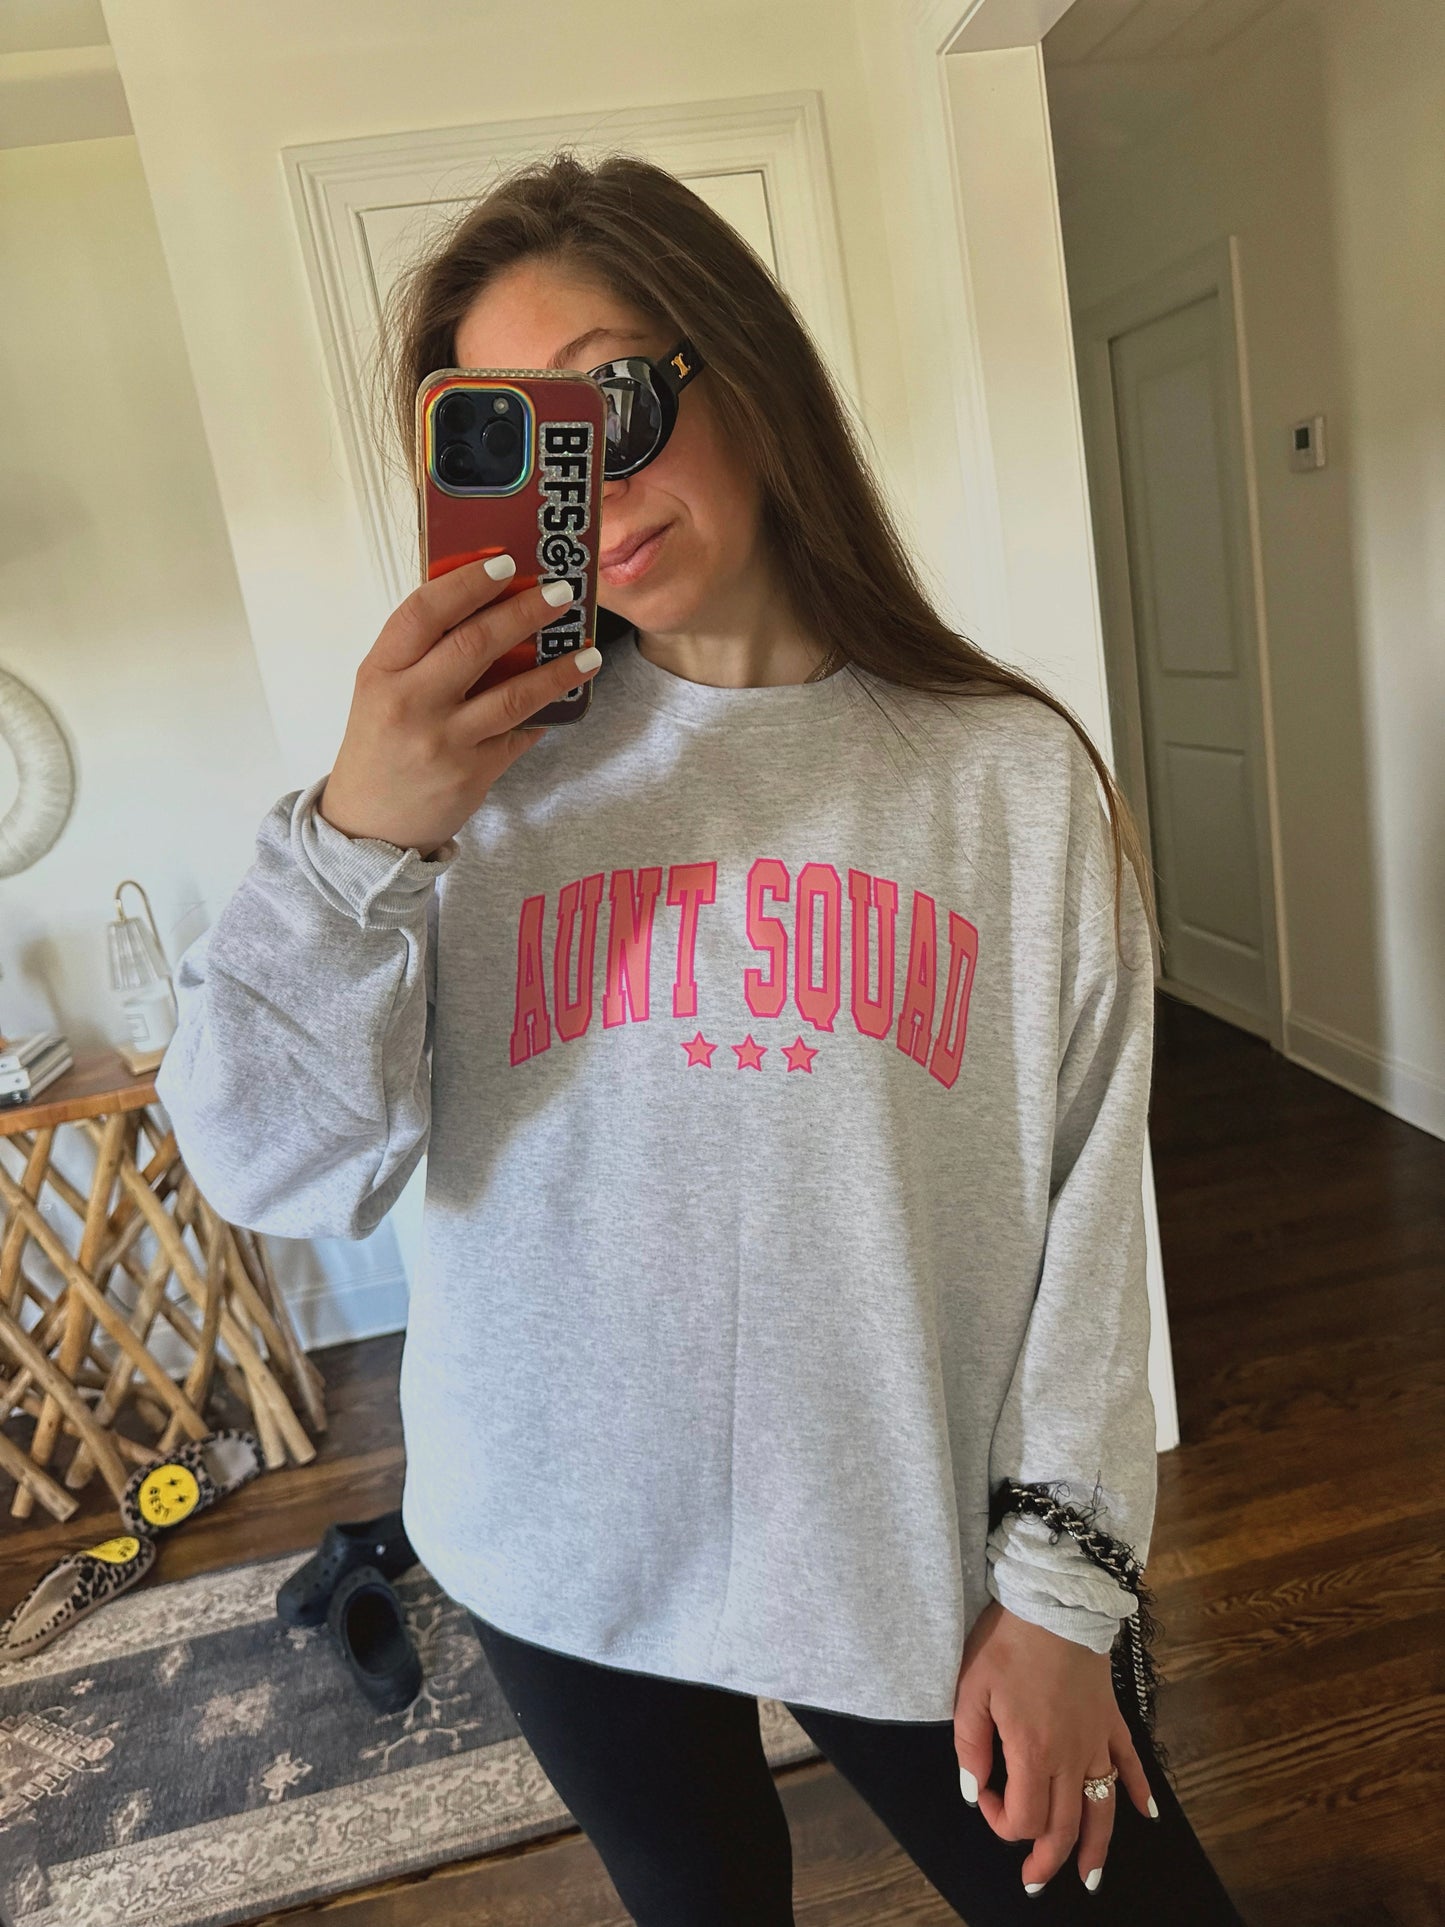 AUNT SQUAD ♡ printed sweatshirt